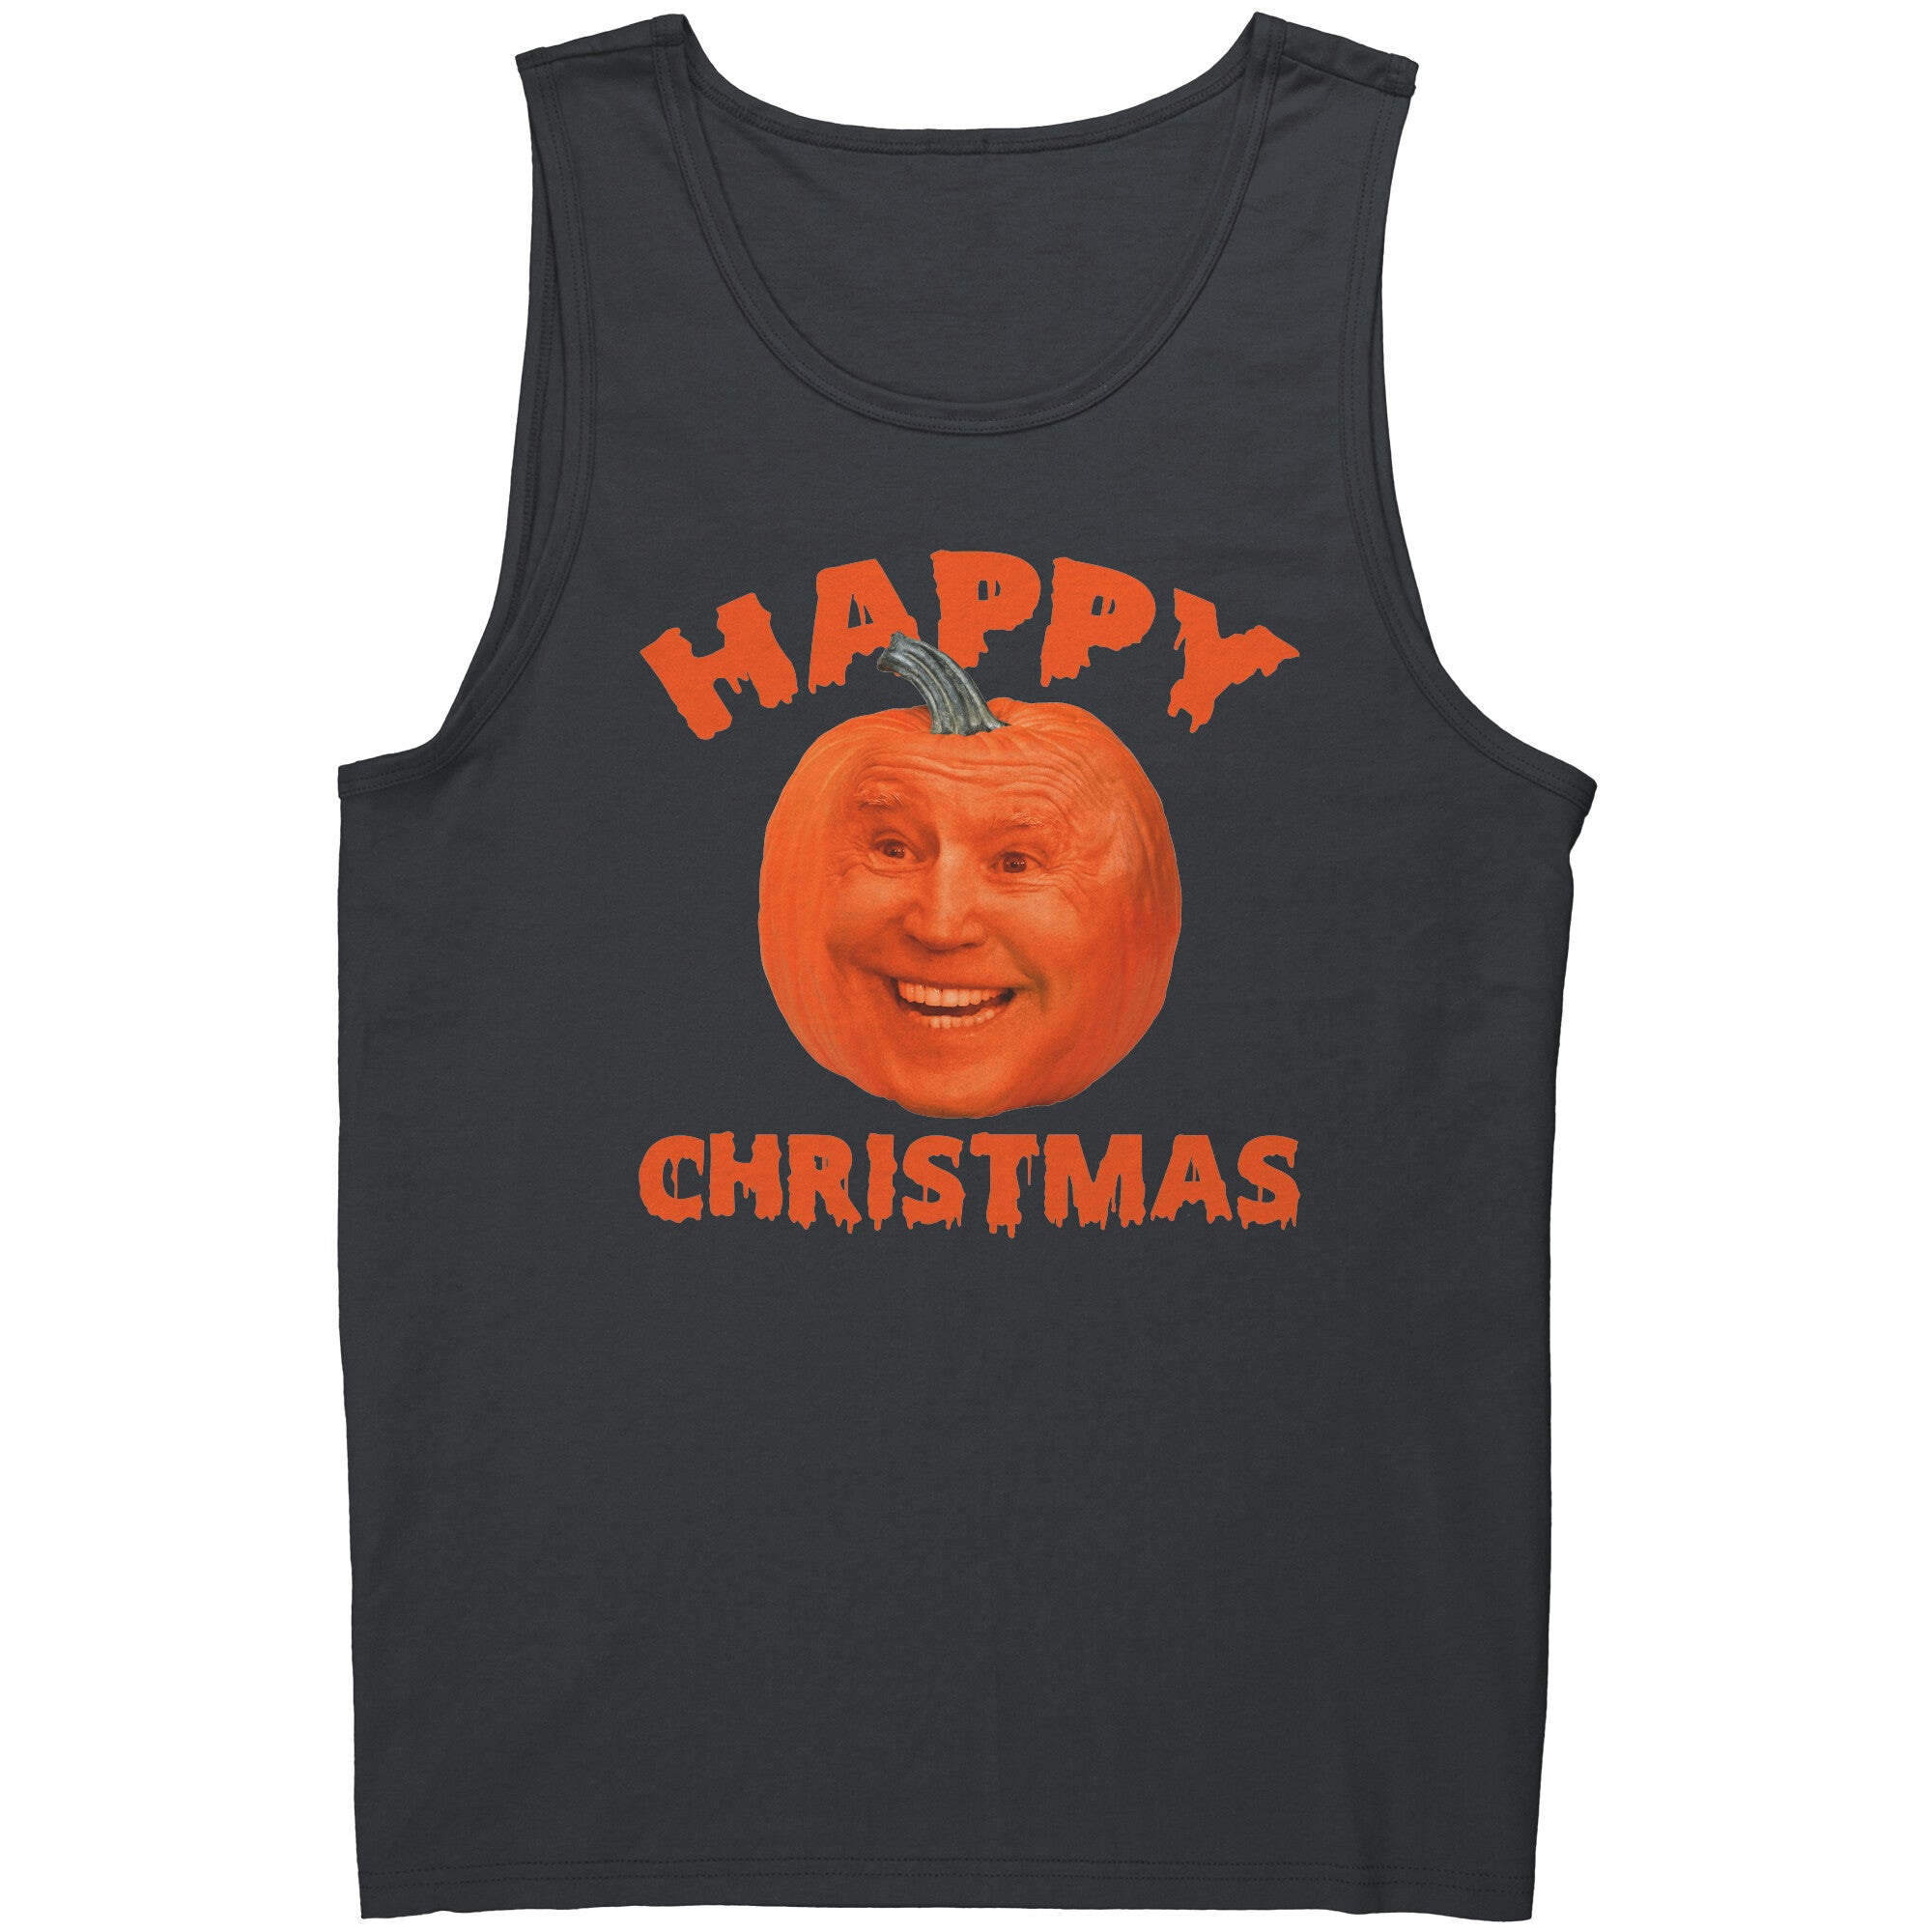 Creepy Joe Biden Happy Christmas -Apparel | Drunk America 